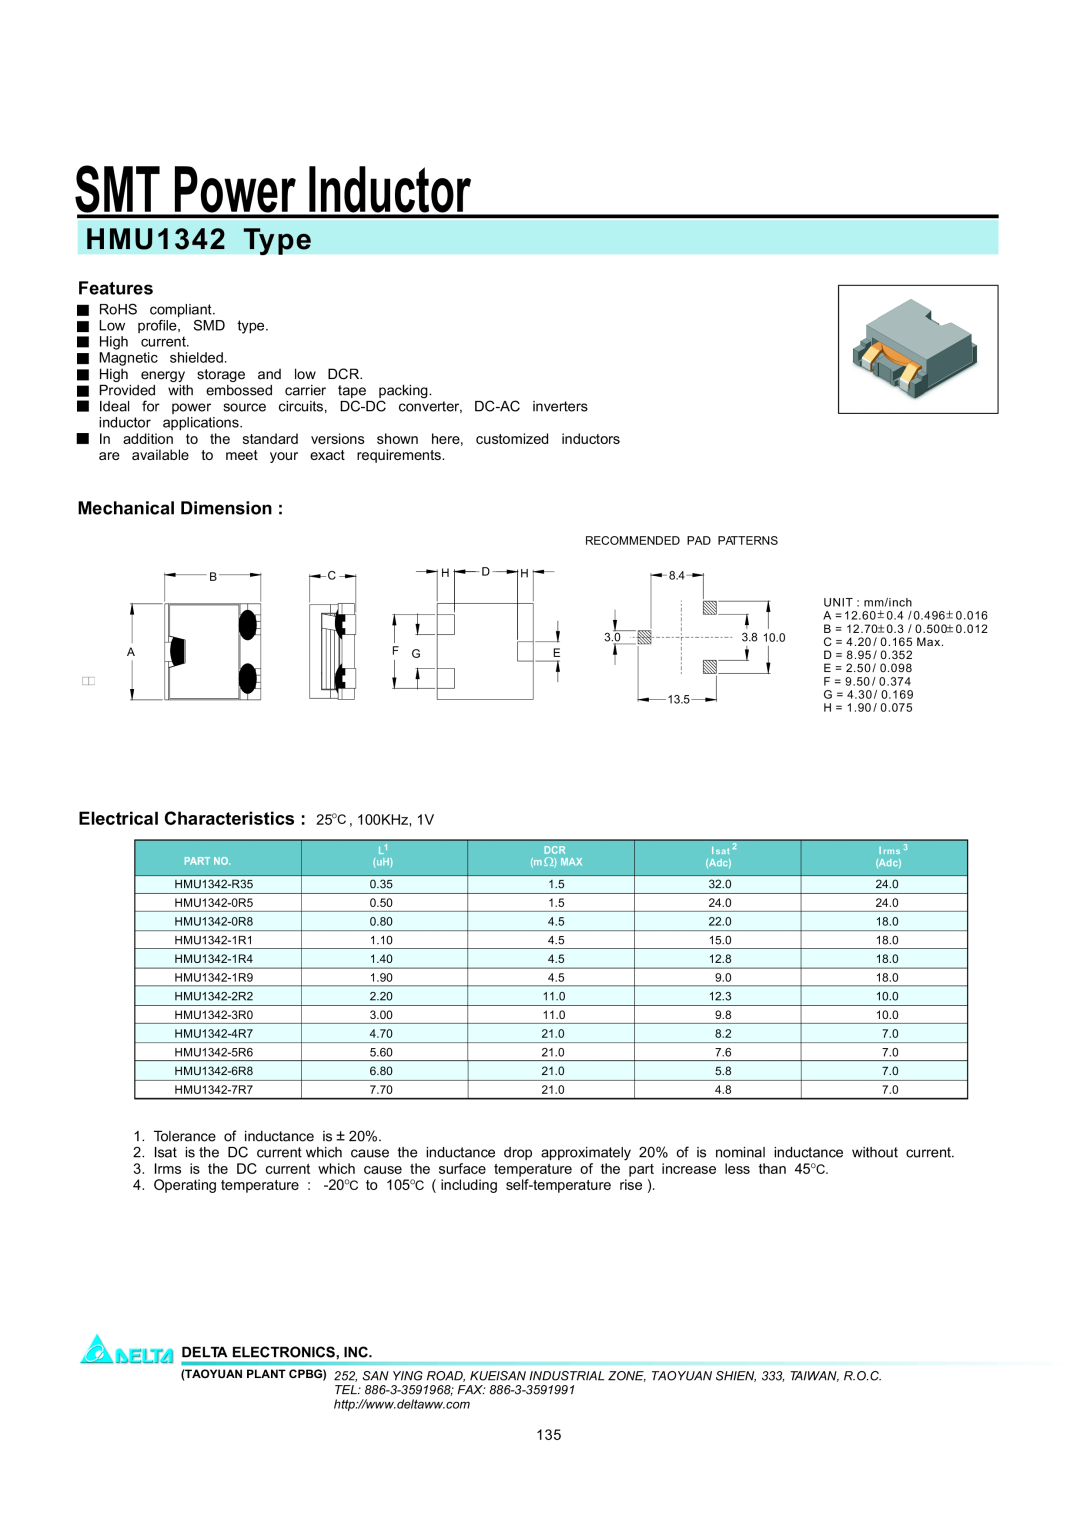 Delta Electronics manual SMT Power Inductor, HMU1342 Type, Features, Mechanical Dimension, Delta Electronics, Inc 